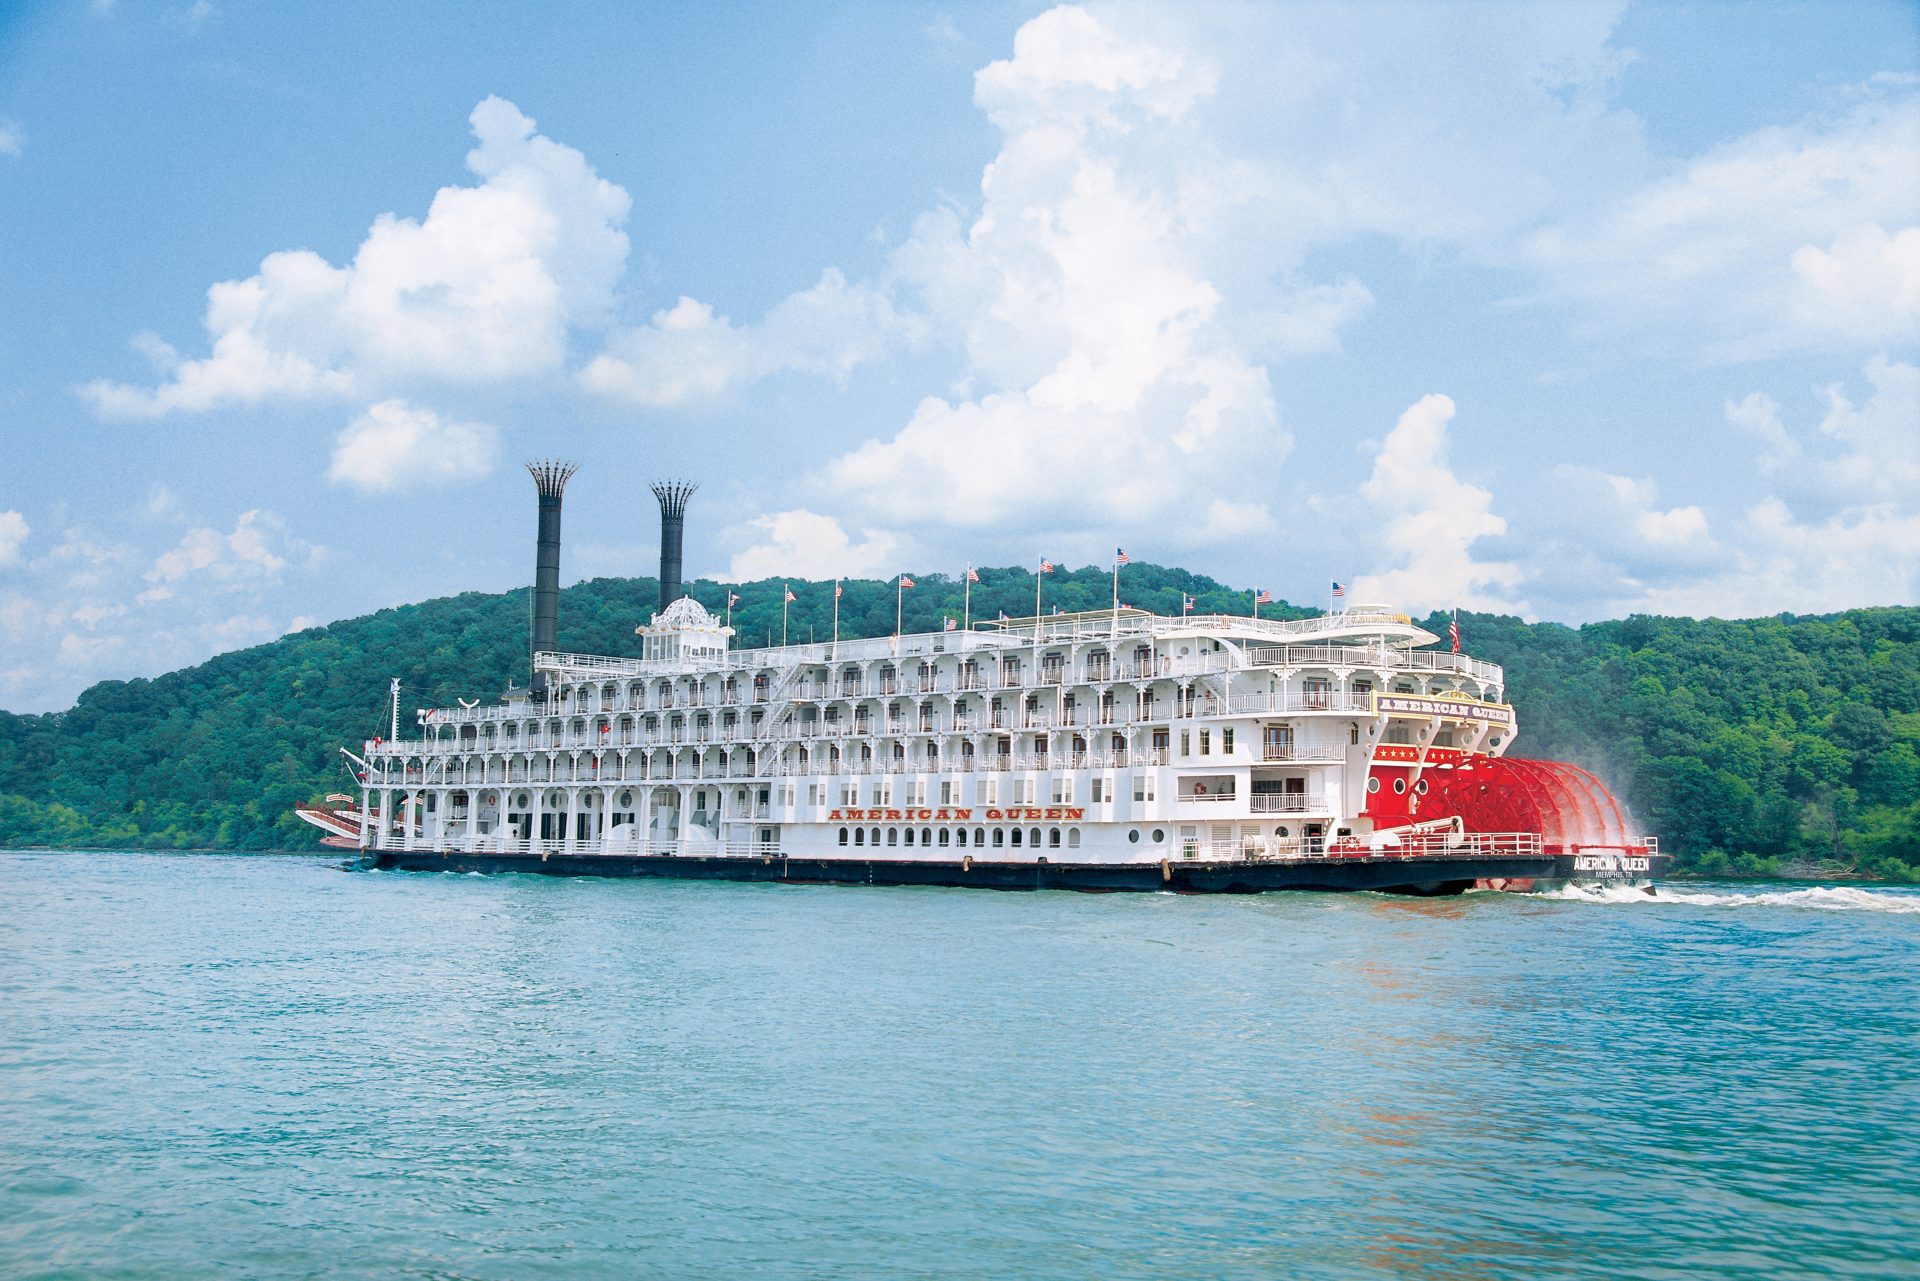 American Queen USA River Cruises